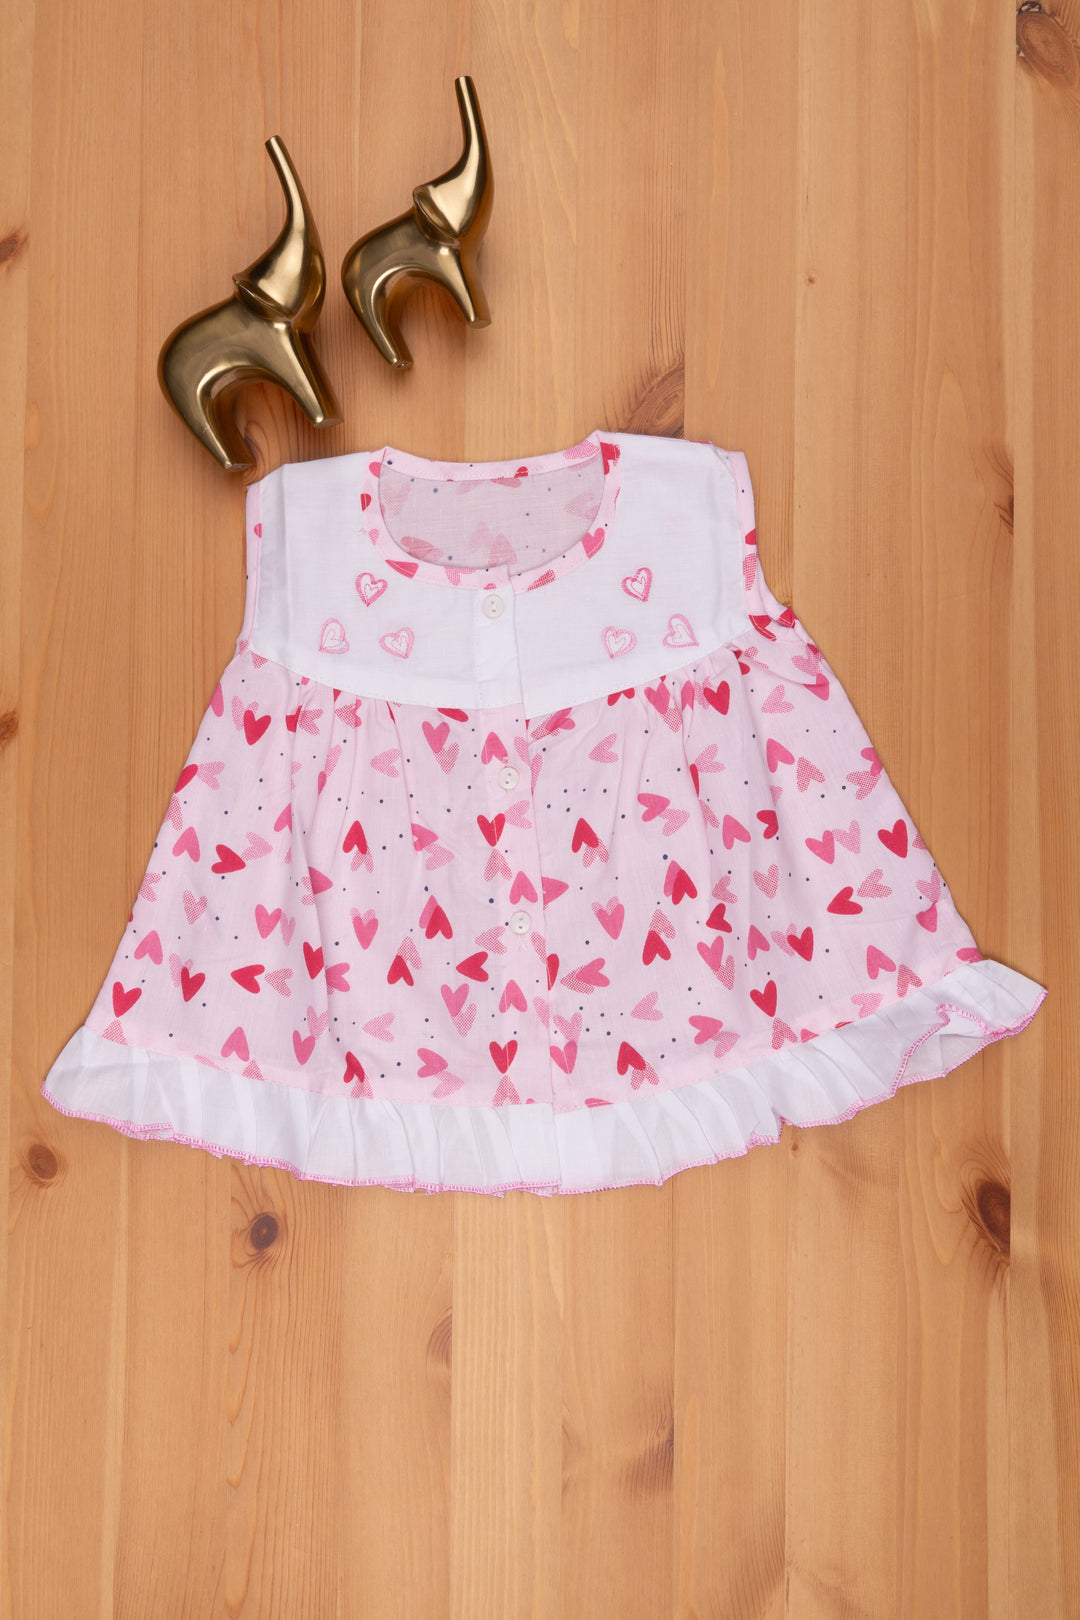 The Nesavu Baby Frock / Jhabla Frilled Pink Dress with Heart Print: Baby Girl Elegance Nesavu 12 (3M) / Pink BFJ448A-12 Heartin printed Cute Baby Frock | Pink Cotton Frock For Girls | The Nesavu